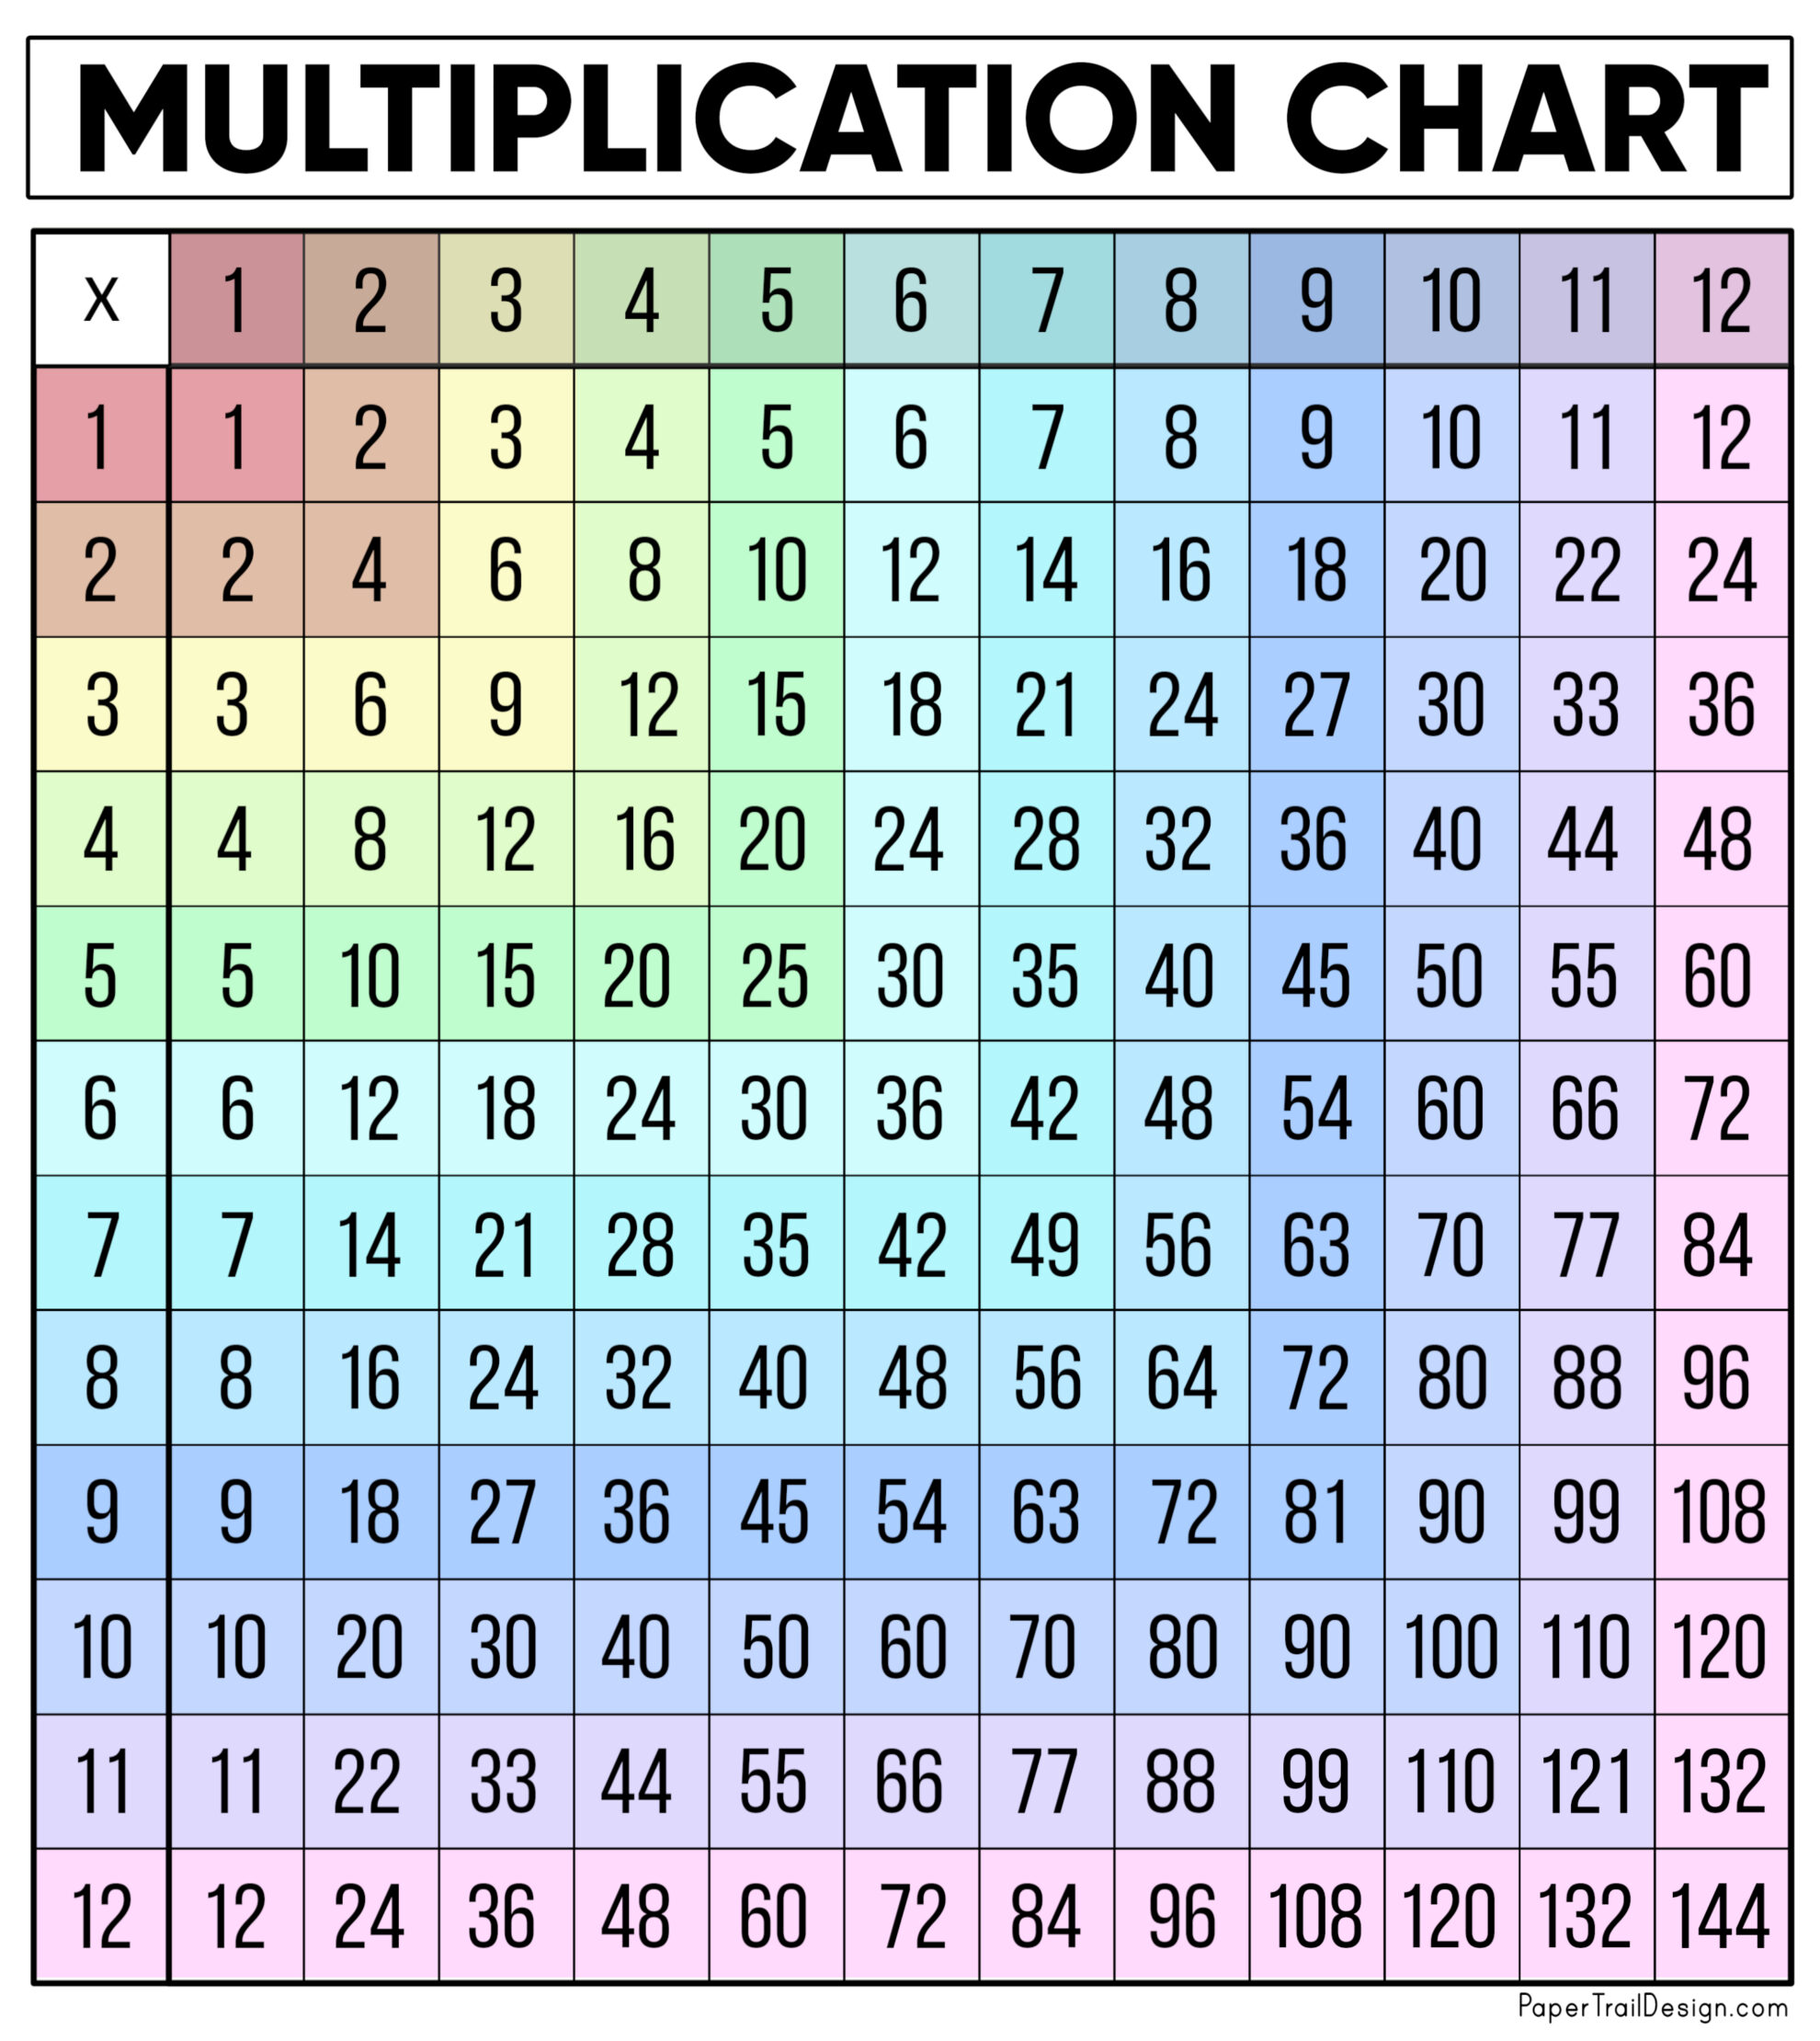 multiplication-facts-chart-printable-printable-templates